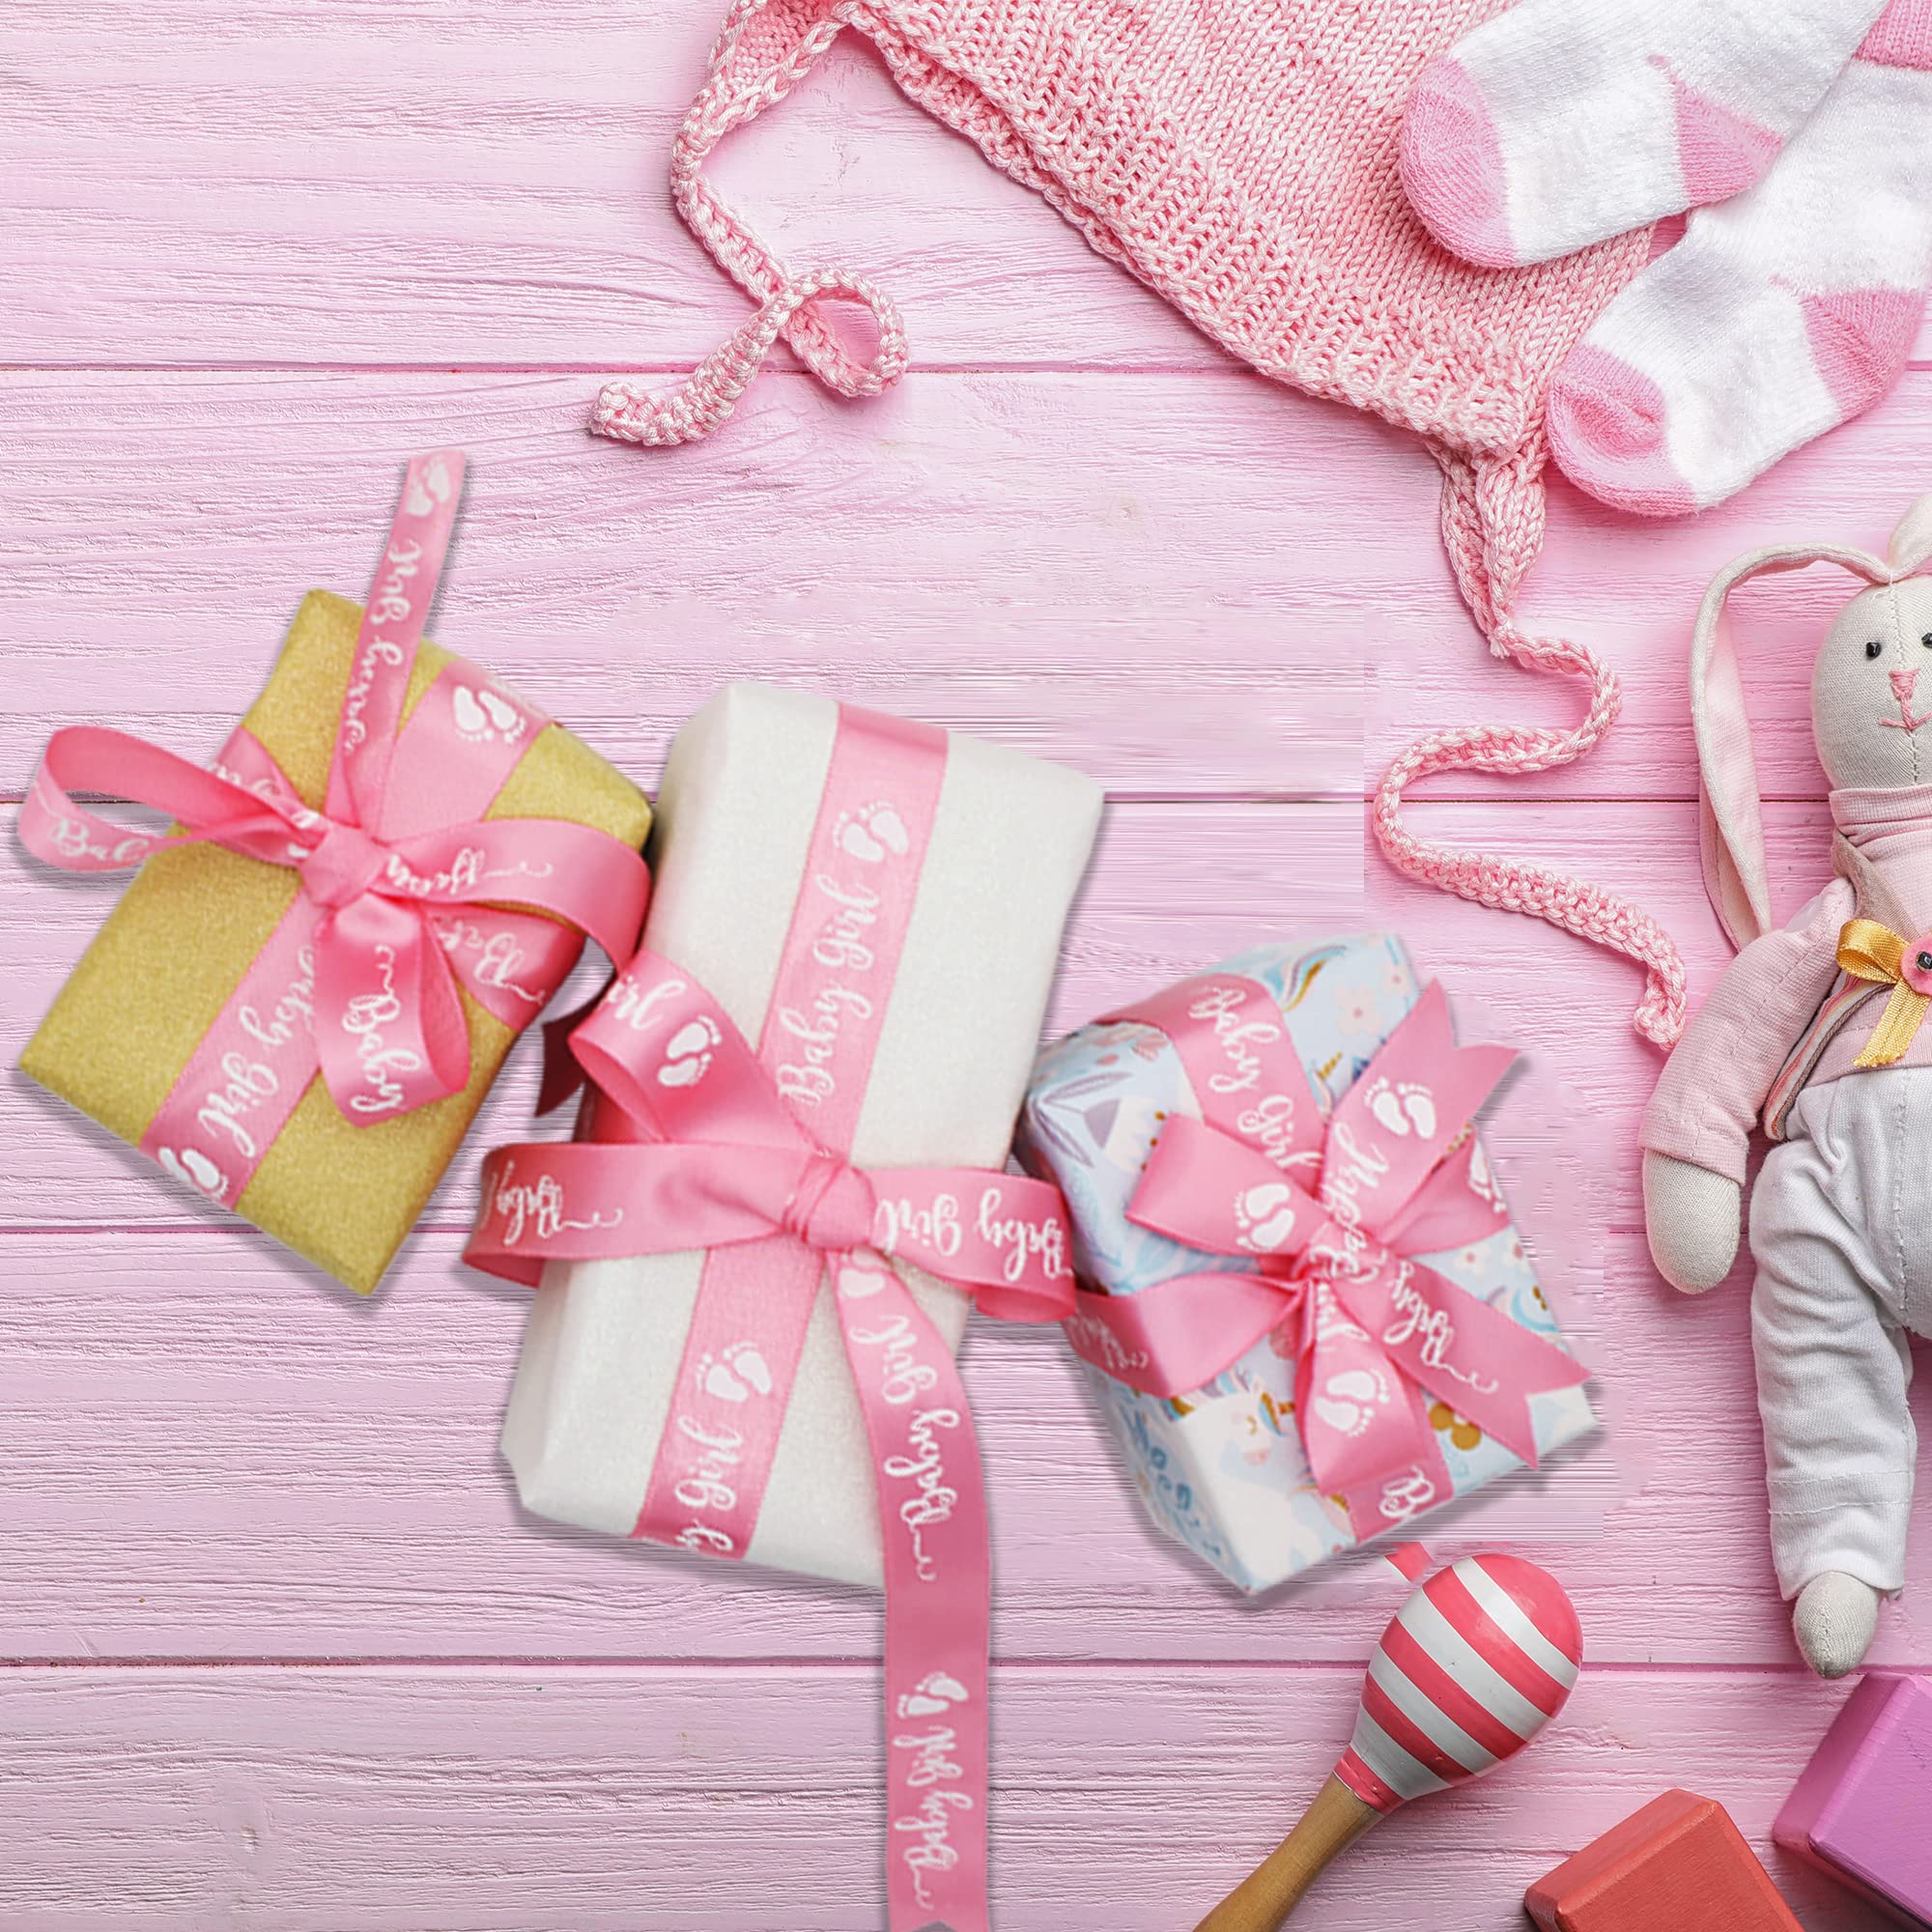 Baby Girl Pink Satin Ribbon 19mm Width Baby Girl Baby Shower Birthday Decoration …